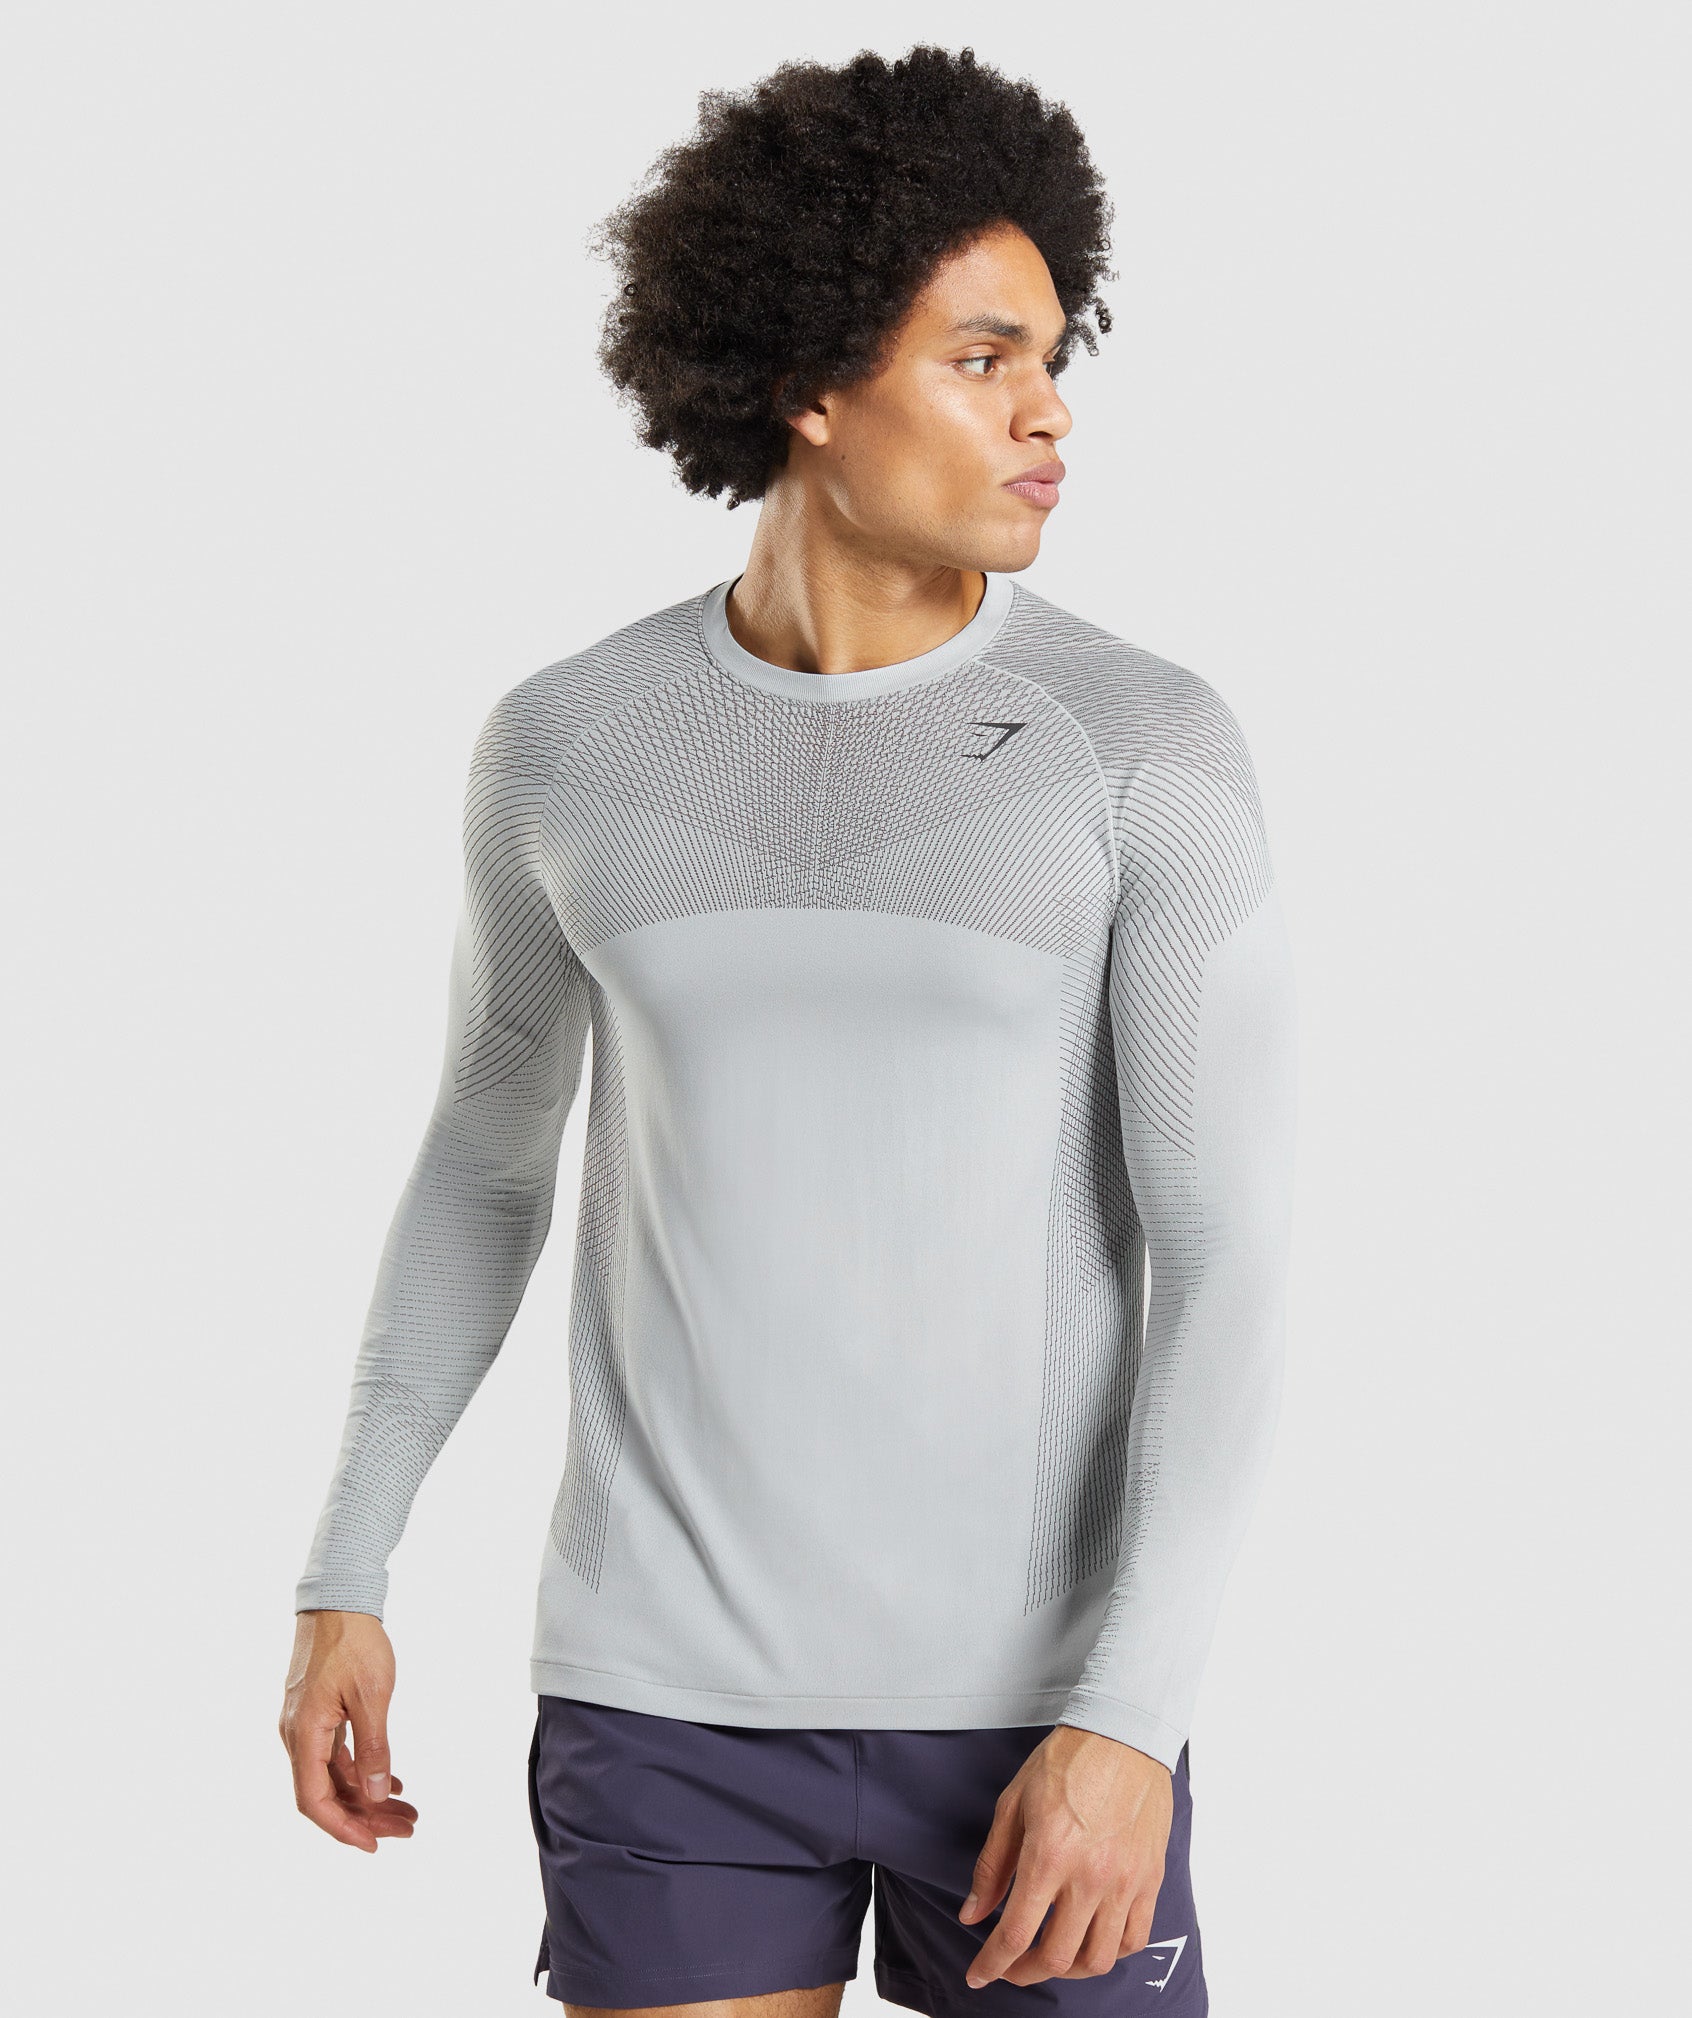 Apex Seamless Long Sleeve T-Shirt in Light Grey/Onyx Grey - view 1